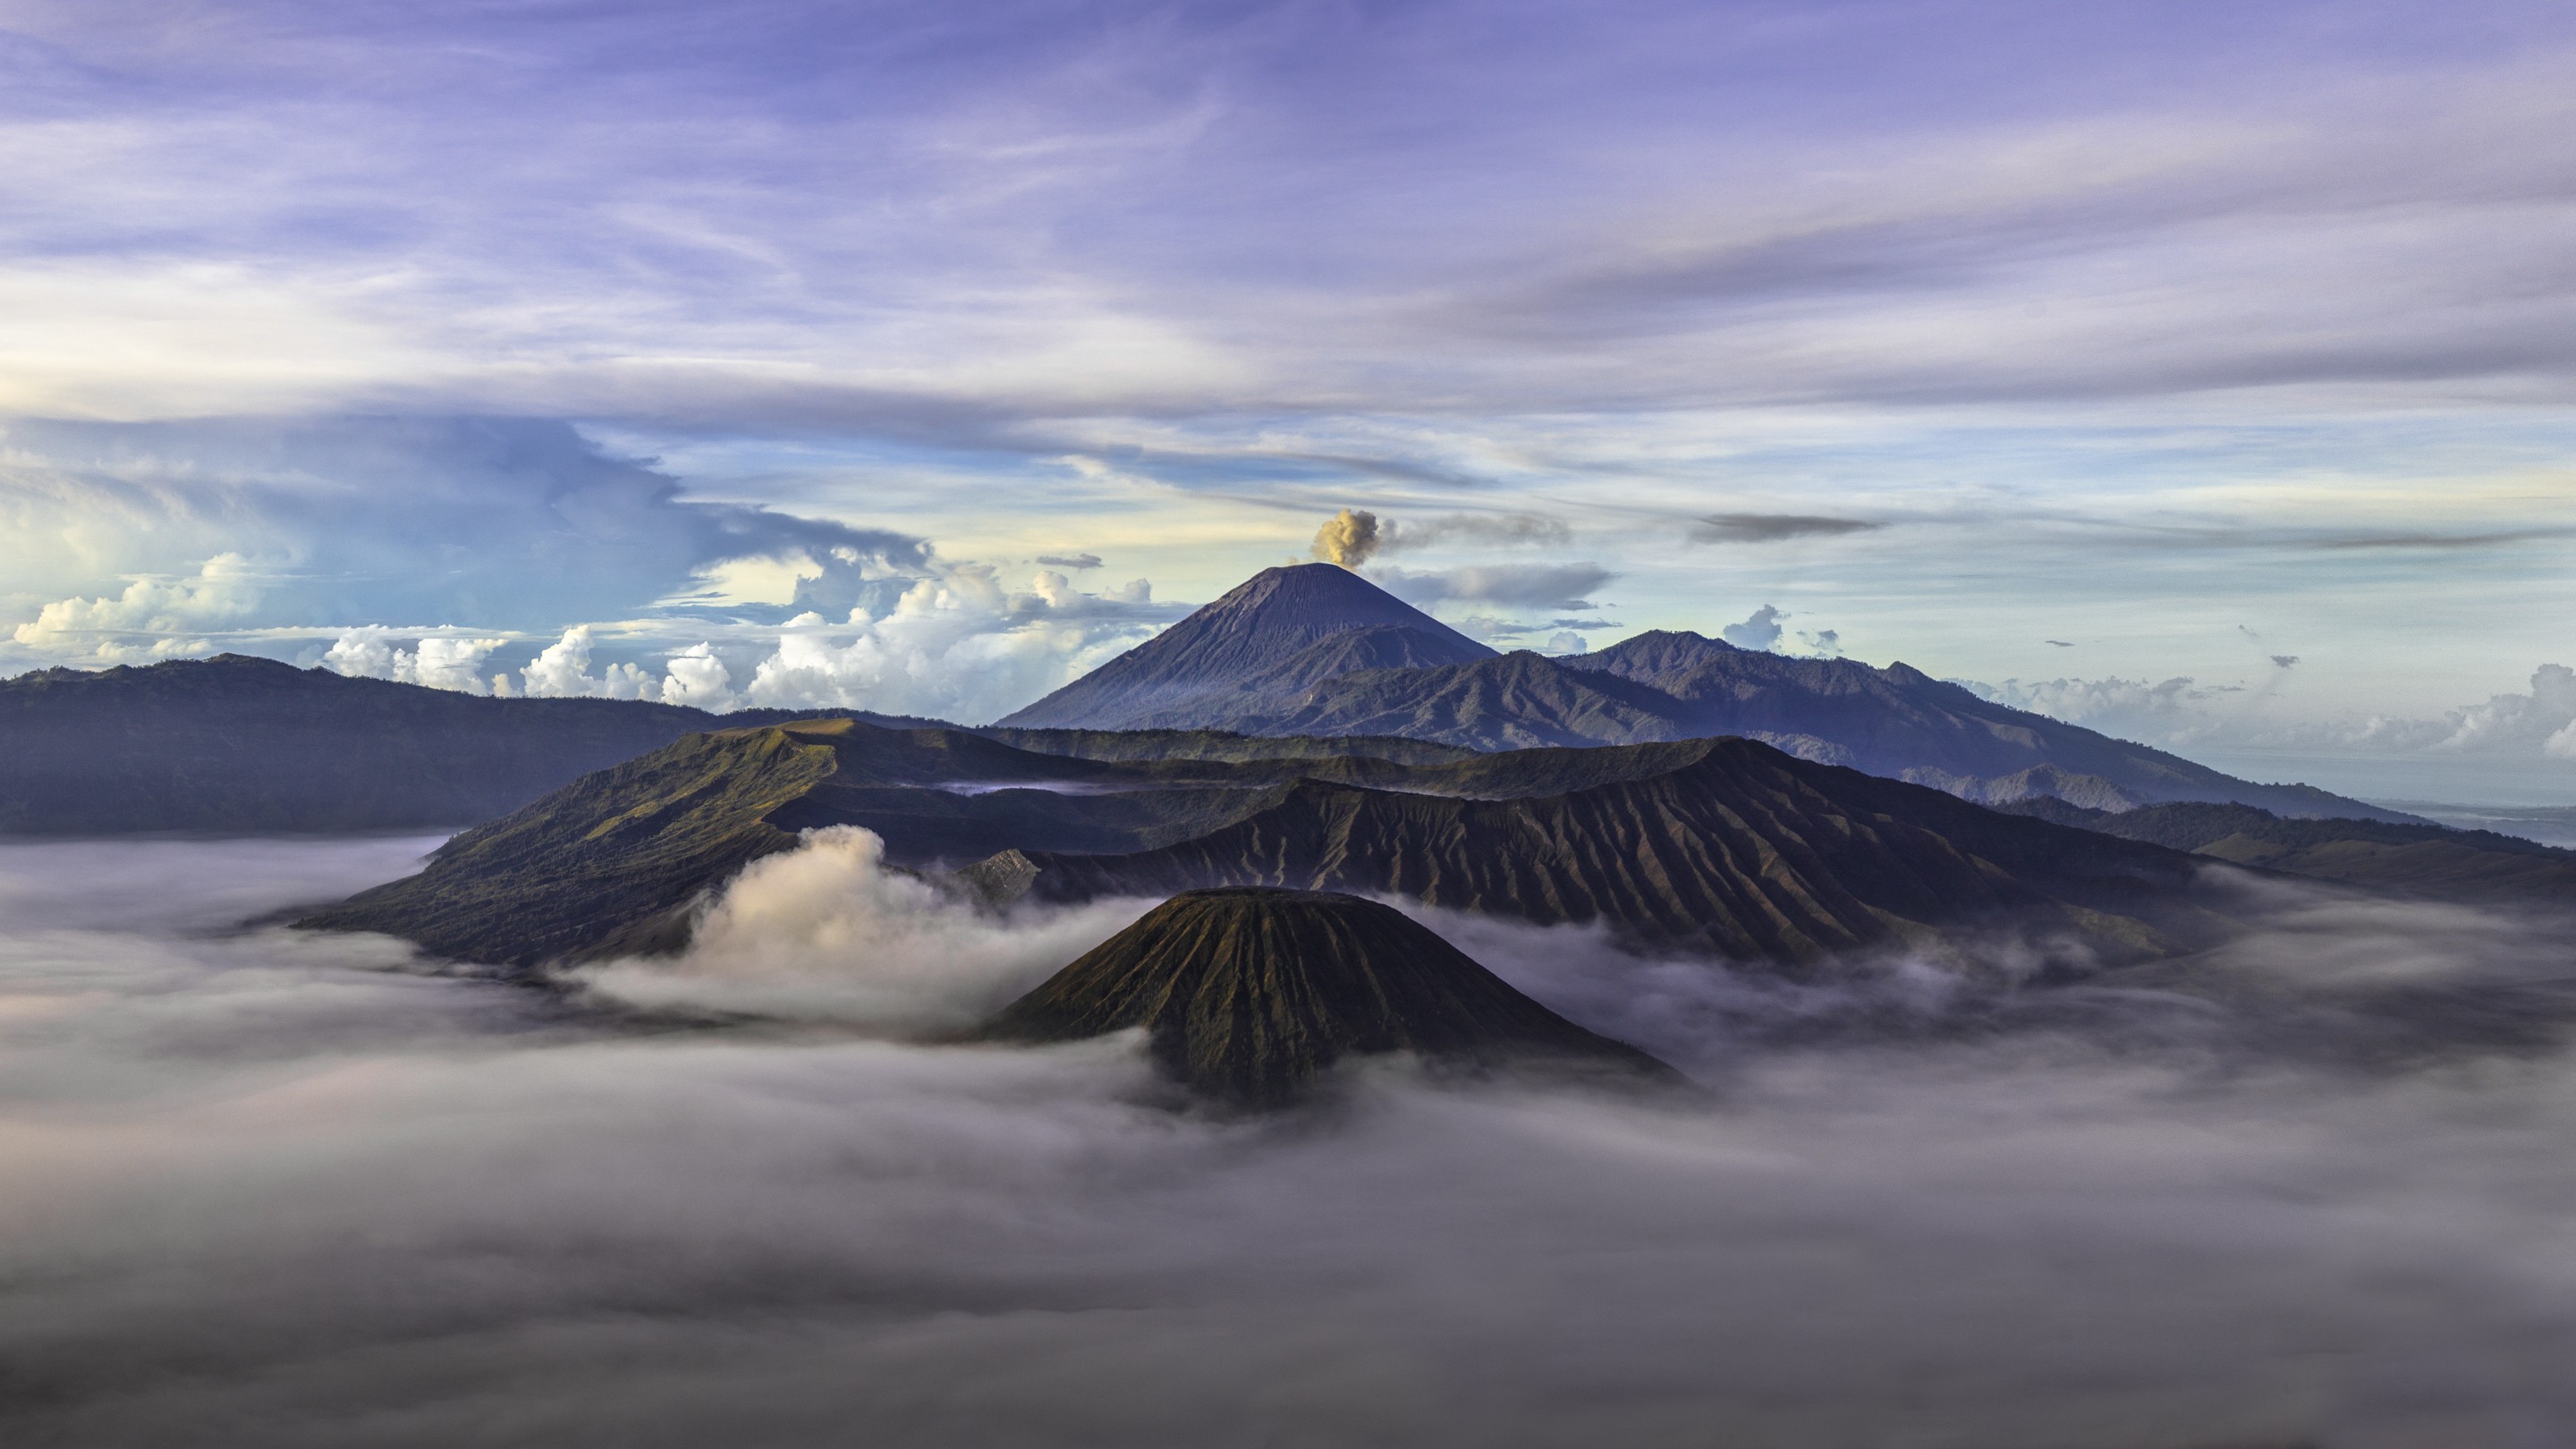 353155 Bild herunterladen erde/natur, berg bromo, indonesien, java (indonesien), morgen, vulkan, vulkane - Hintergrundbilder und Bildschirmschoner kostenlos